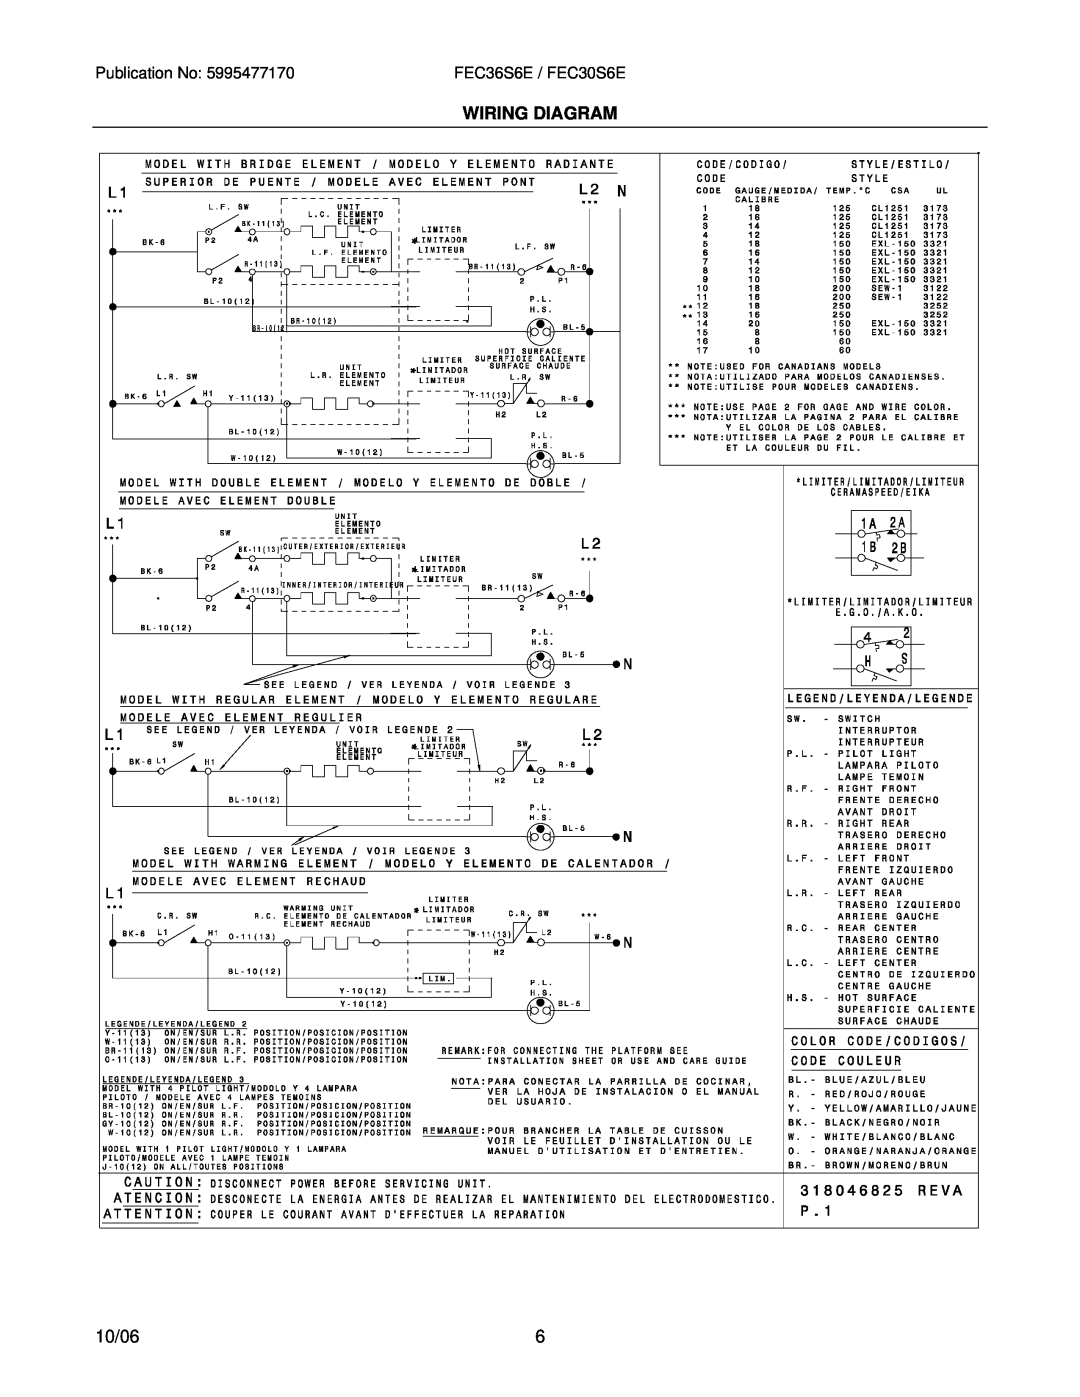 Electrolux FEC36S6E / FEC30S6E installation instructions Wiring Diagram, 10/06 